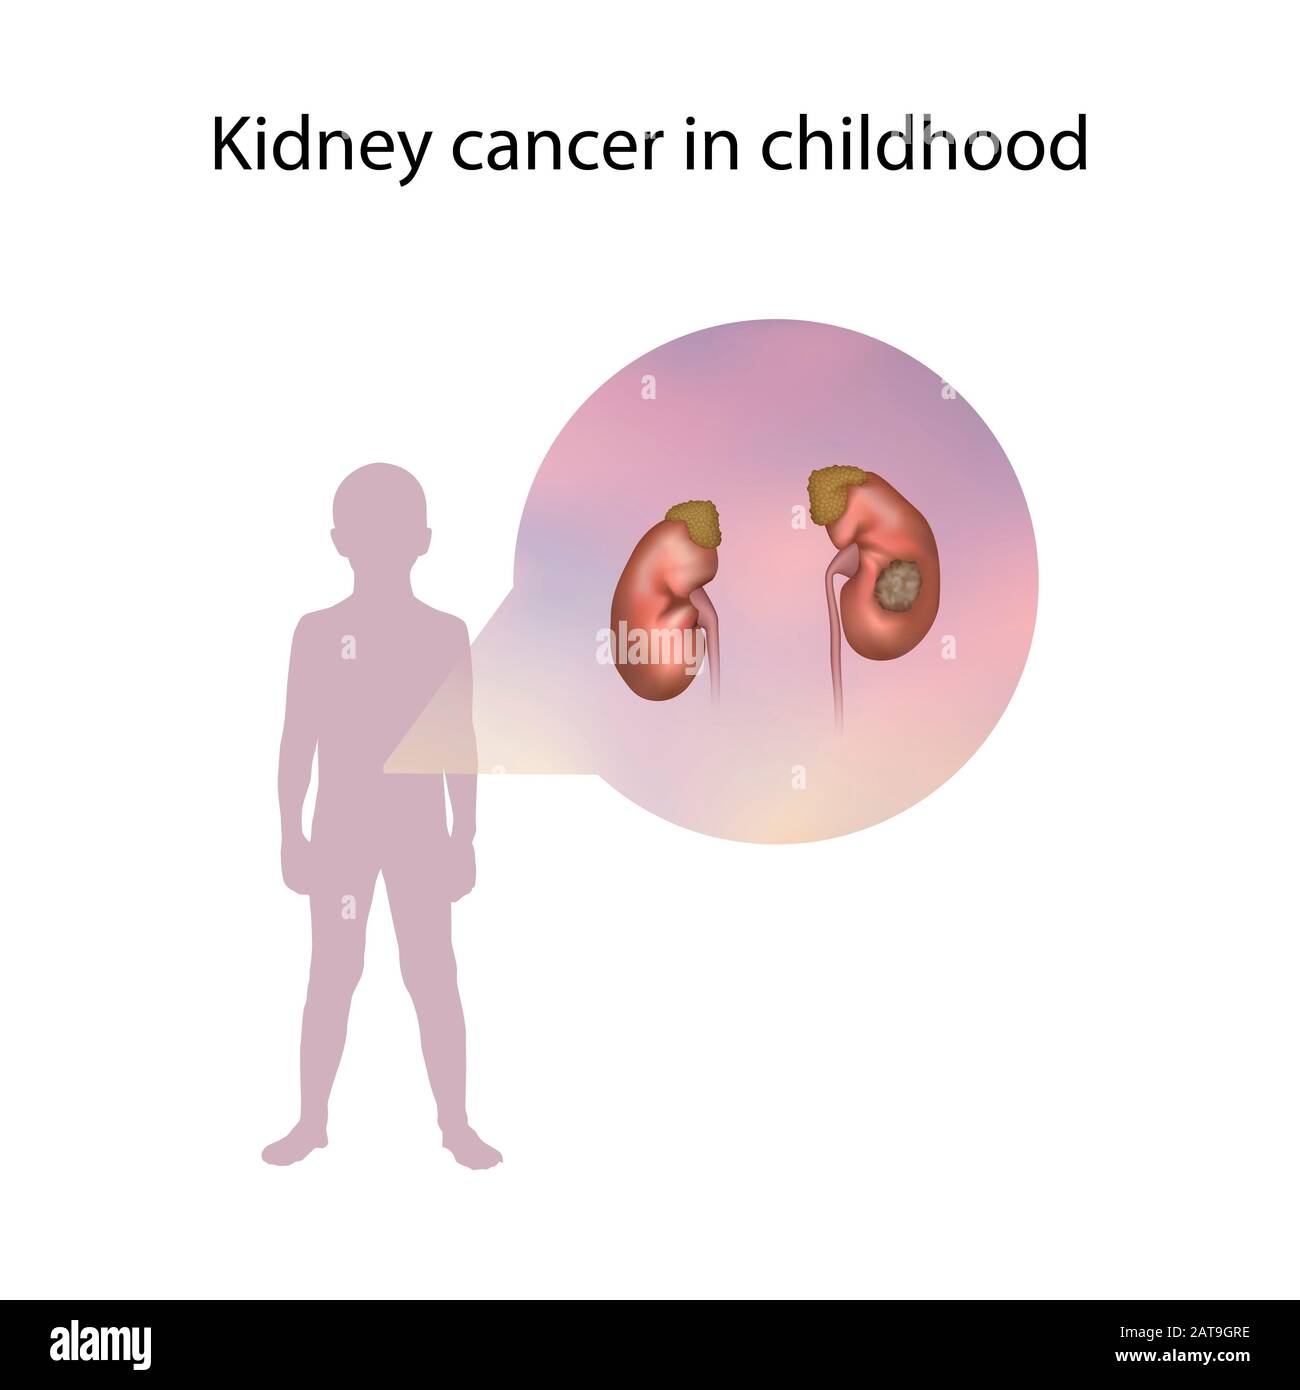 Kidney cancer in childhood, illustration Stock Photo